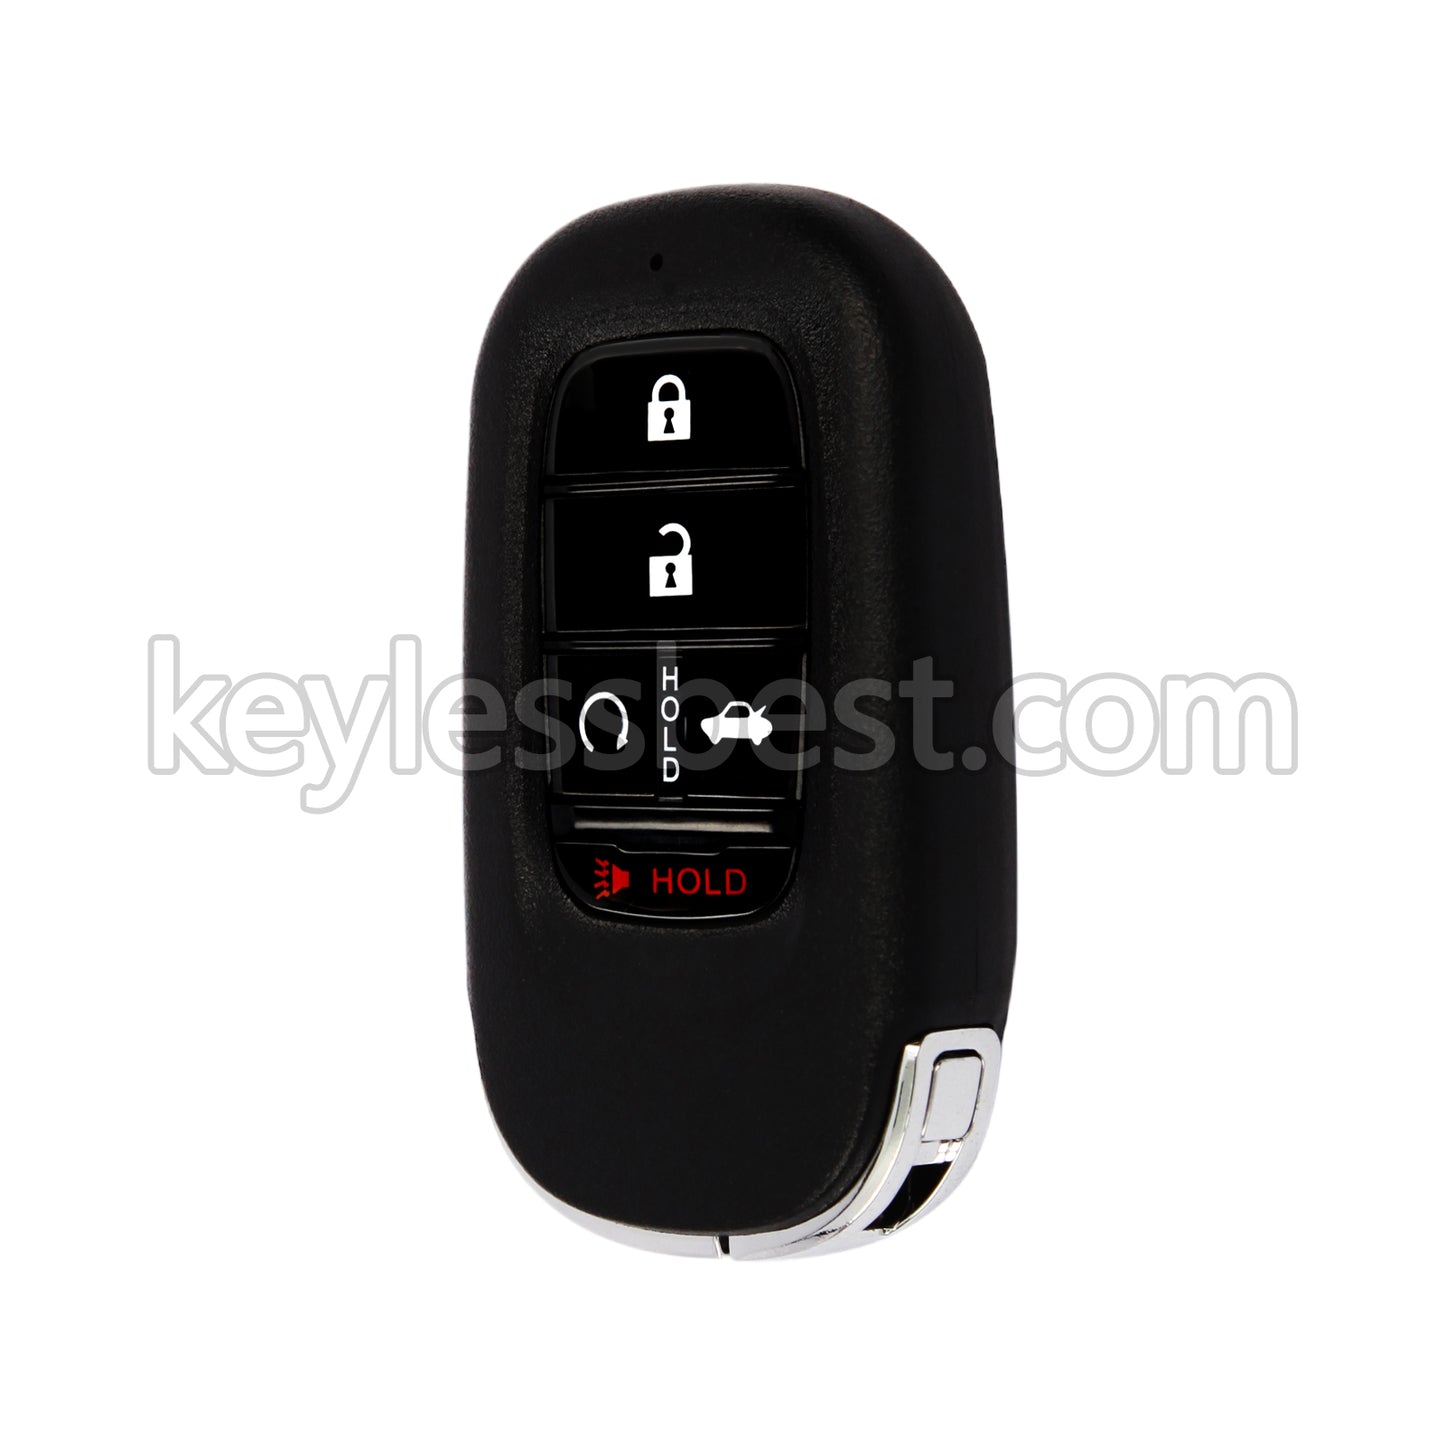 2022-2023 Honda Accord / 5 Buttons Remote Key / KR5TP-4 / 433MHz